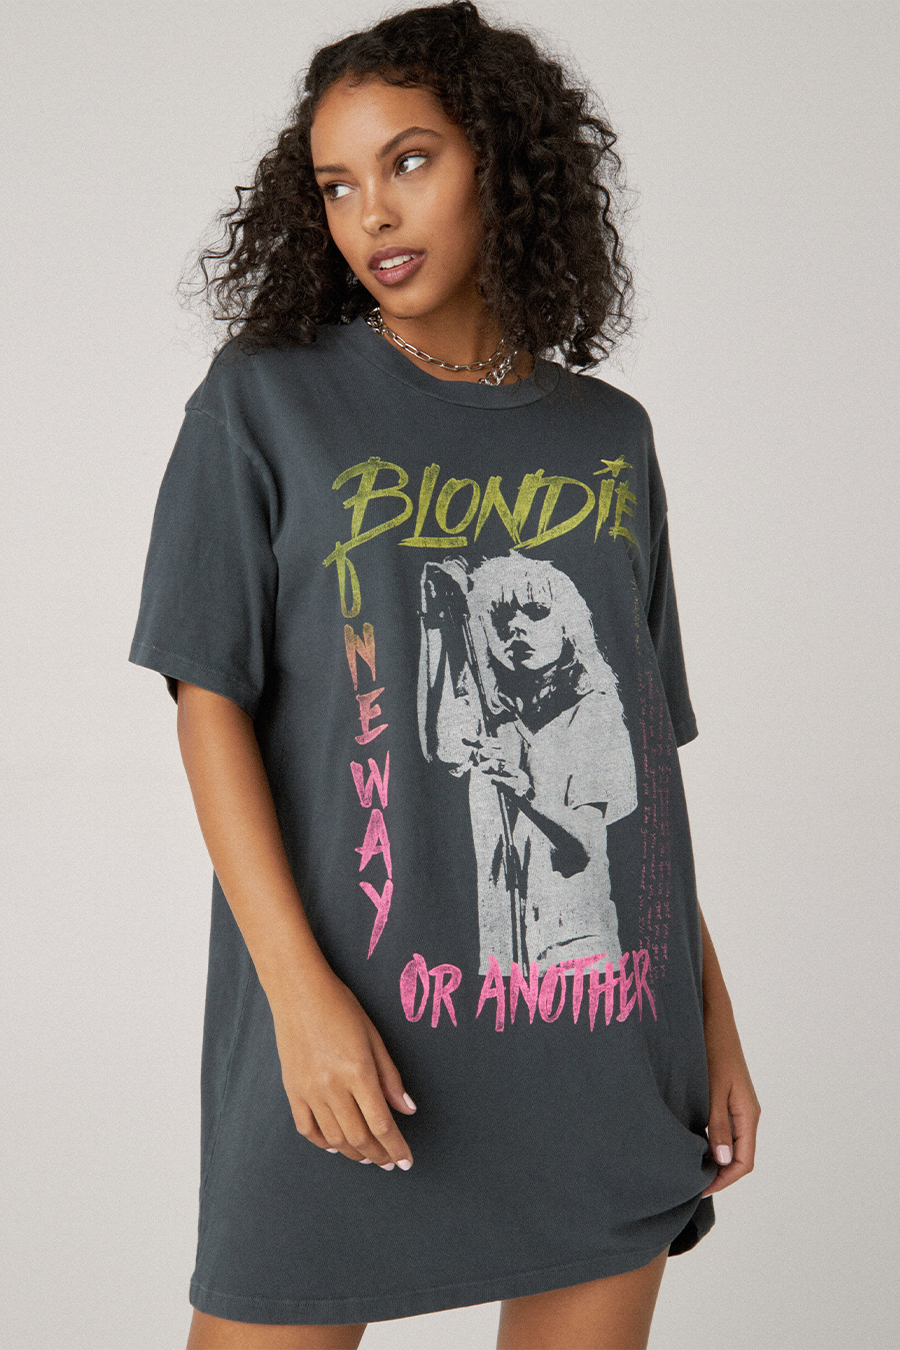 Blondie One Way T-Shirt Dress | V Black - Main Image Number 1 of 1